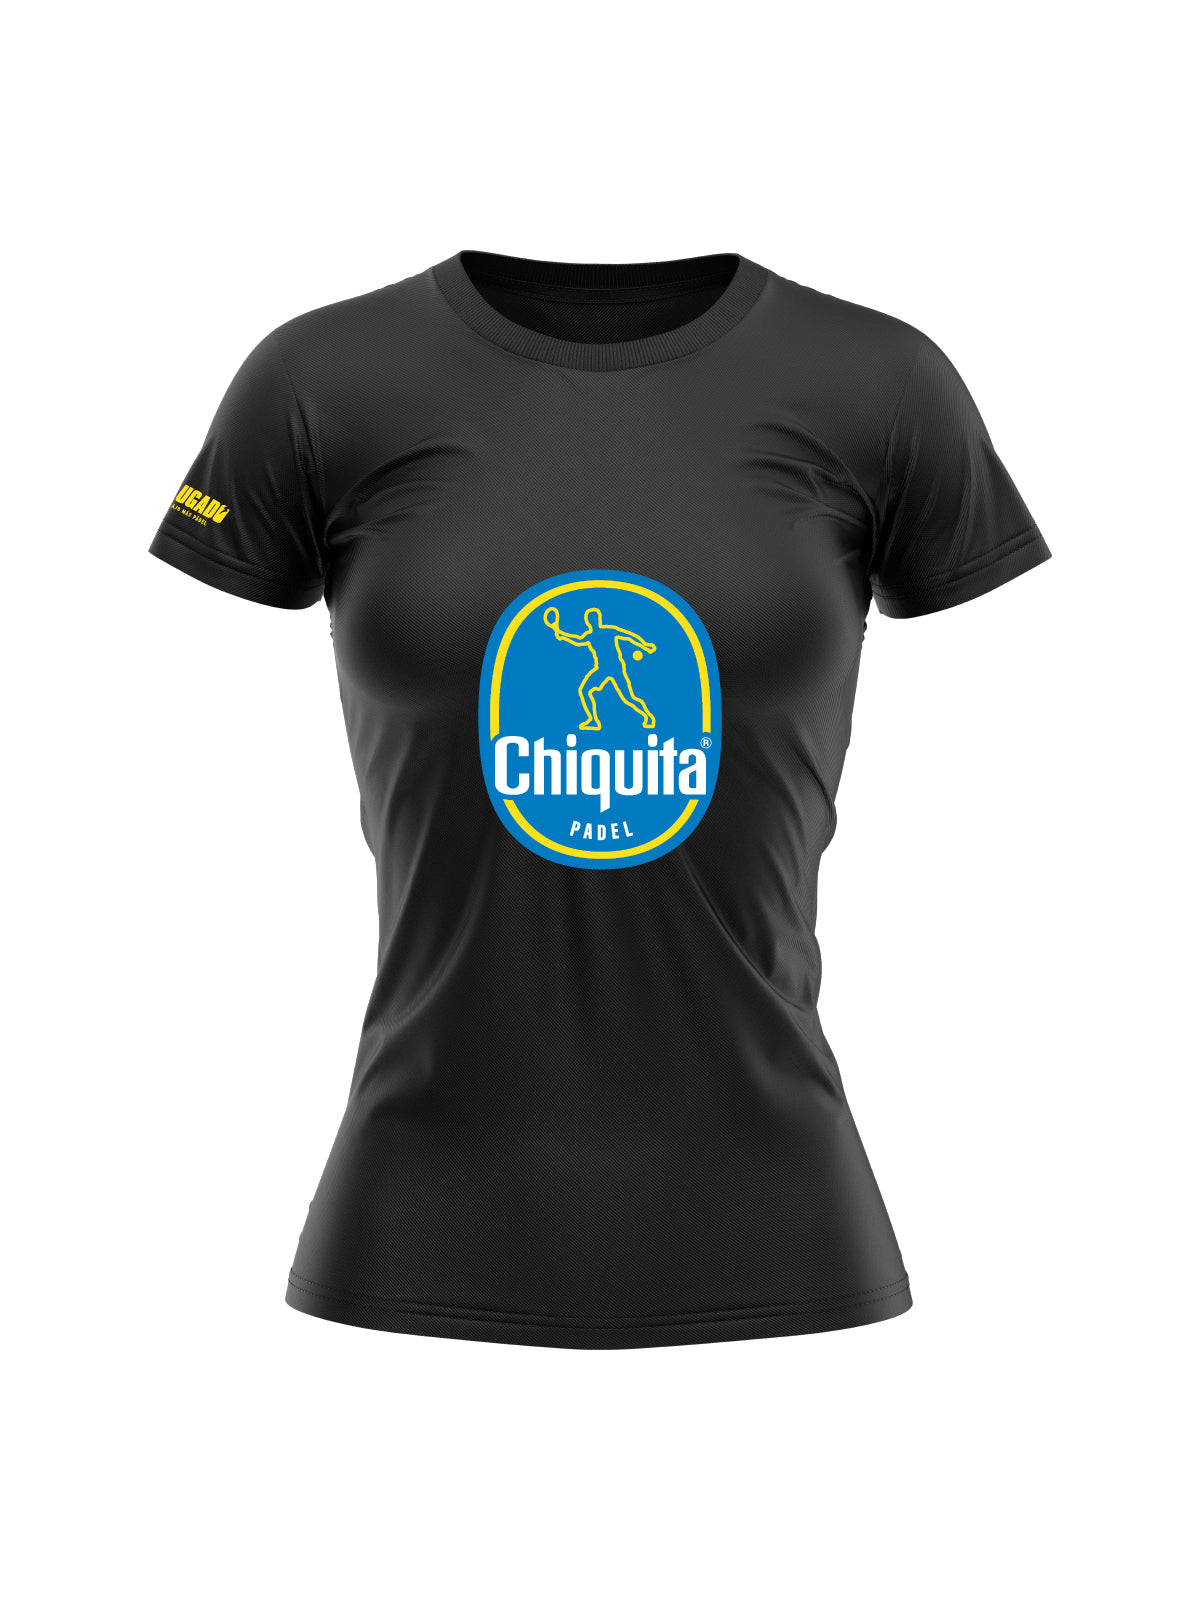 Women's Fun Quick Dry T-Shirt - Chiquita